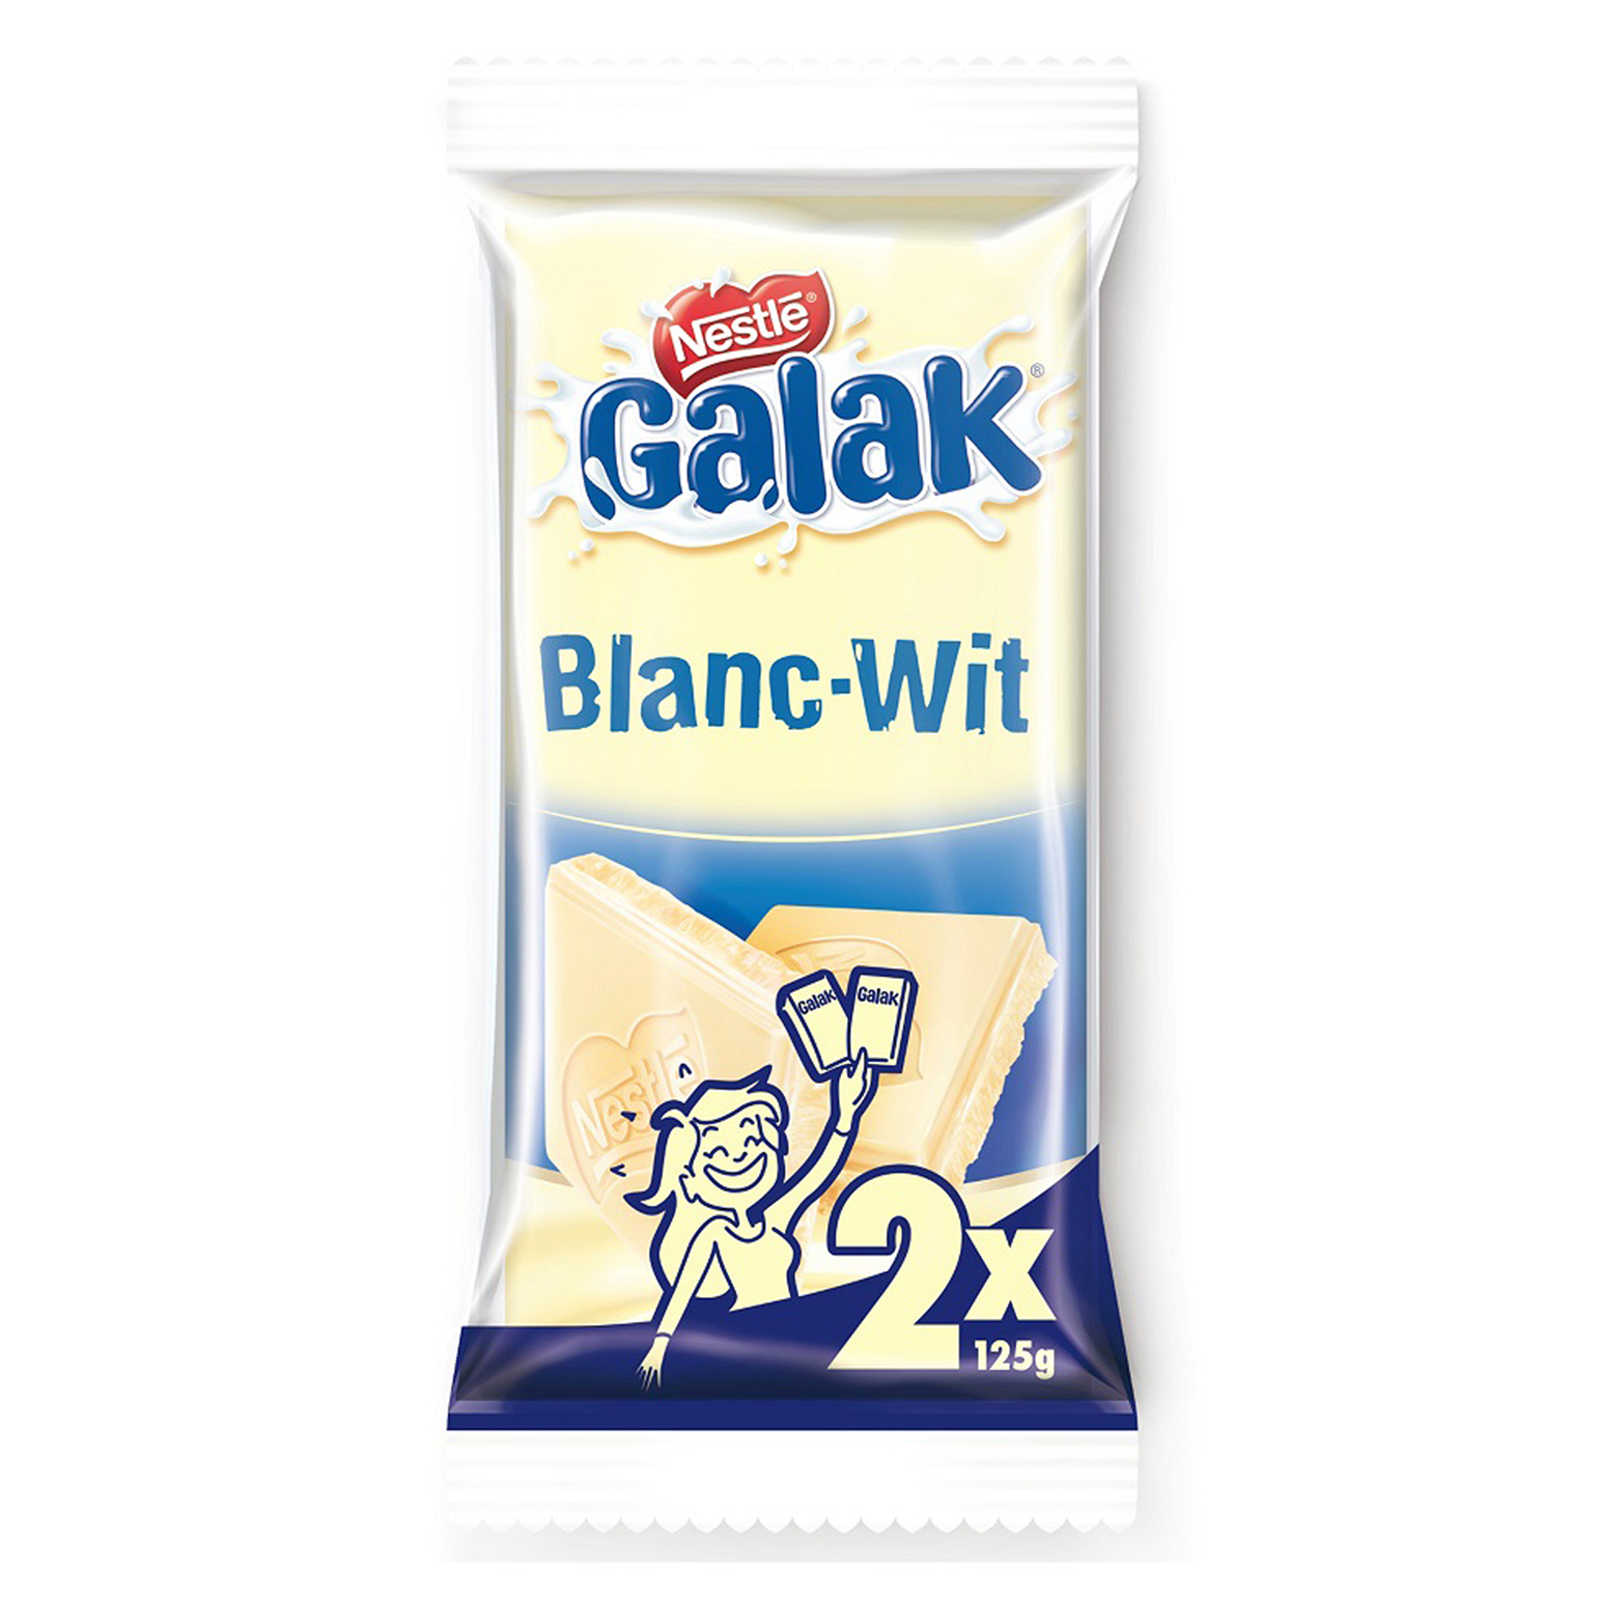 Nestlé-Galak